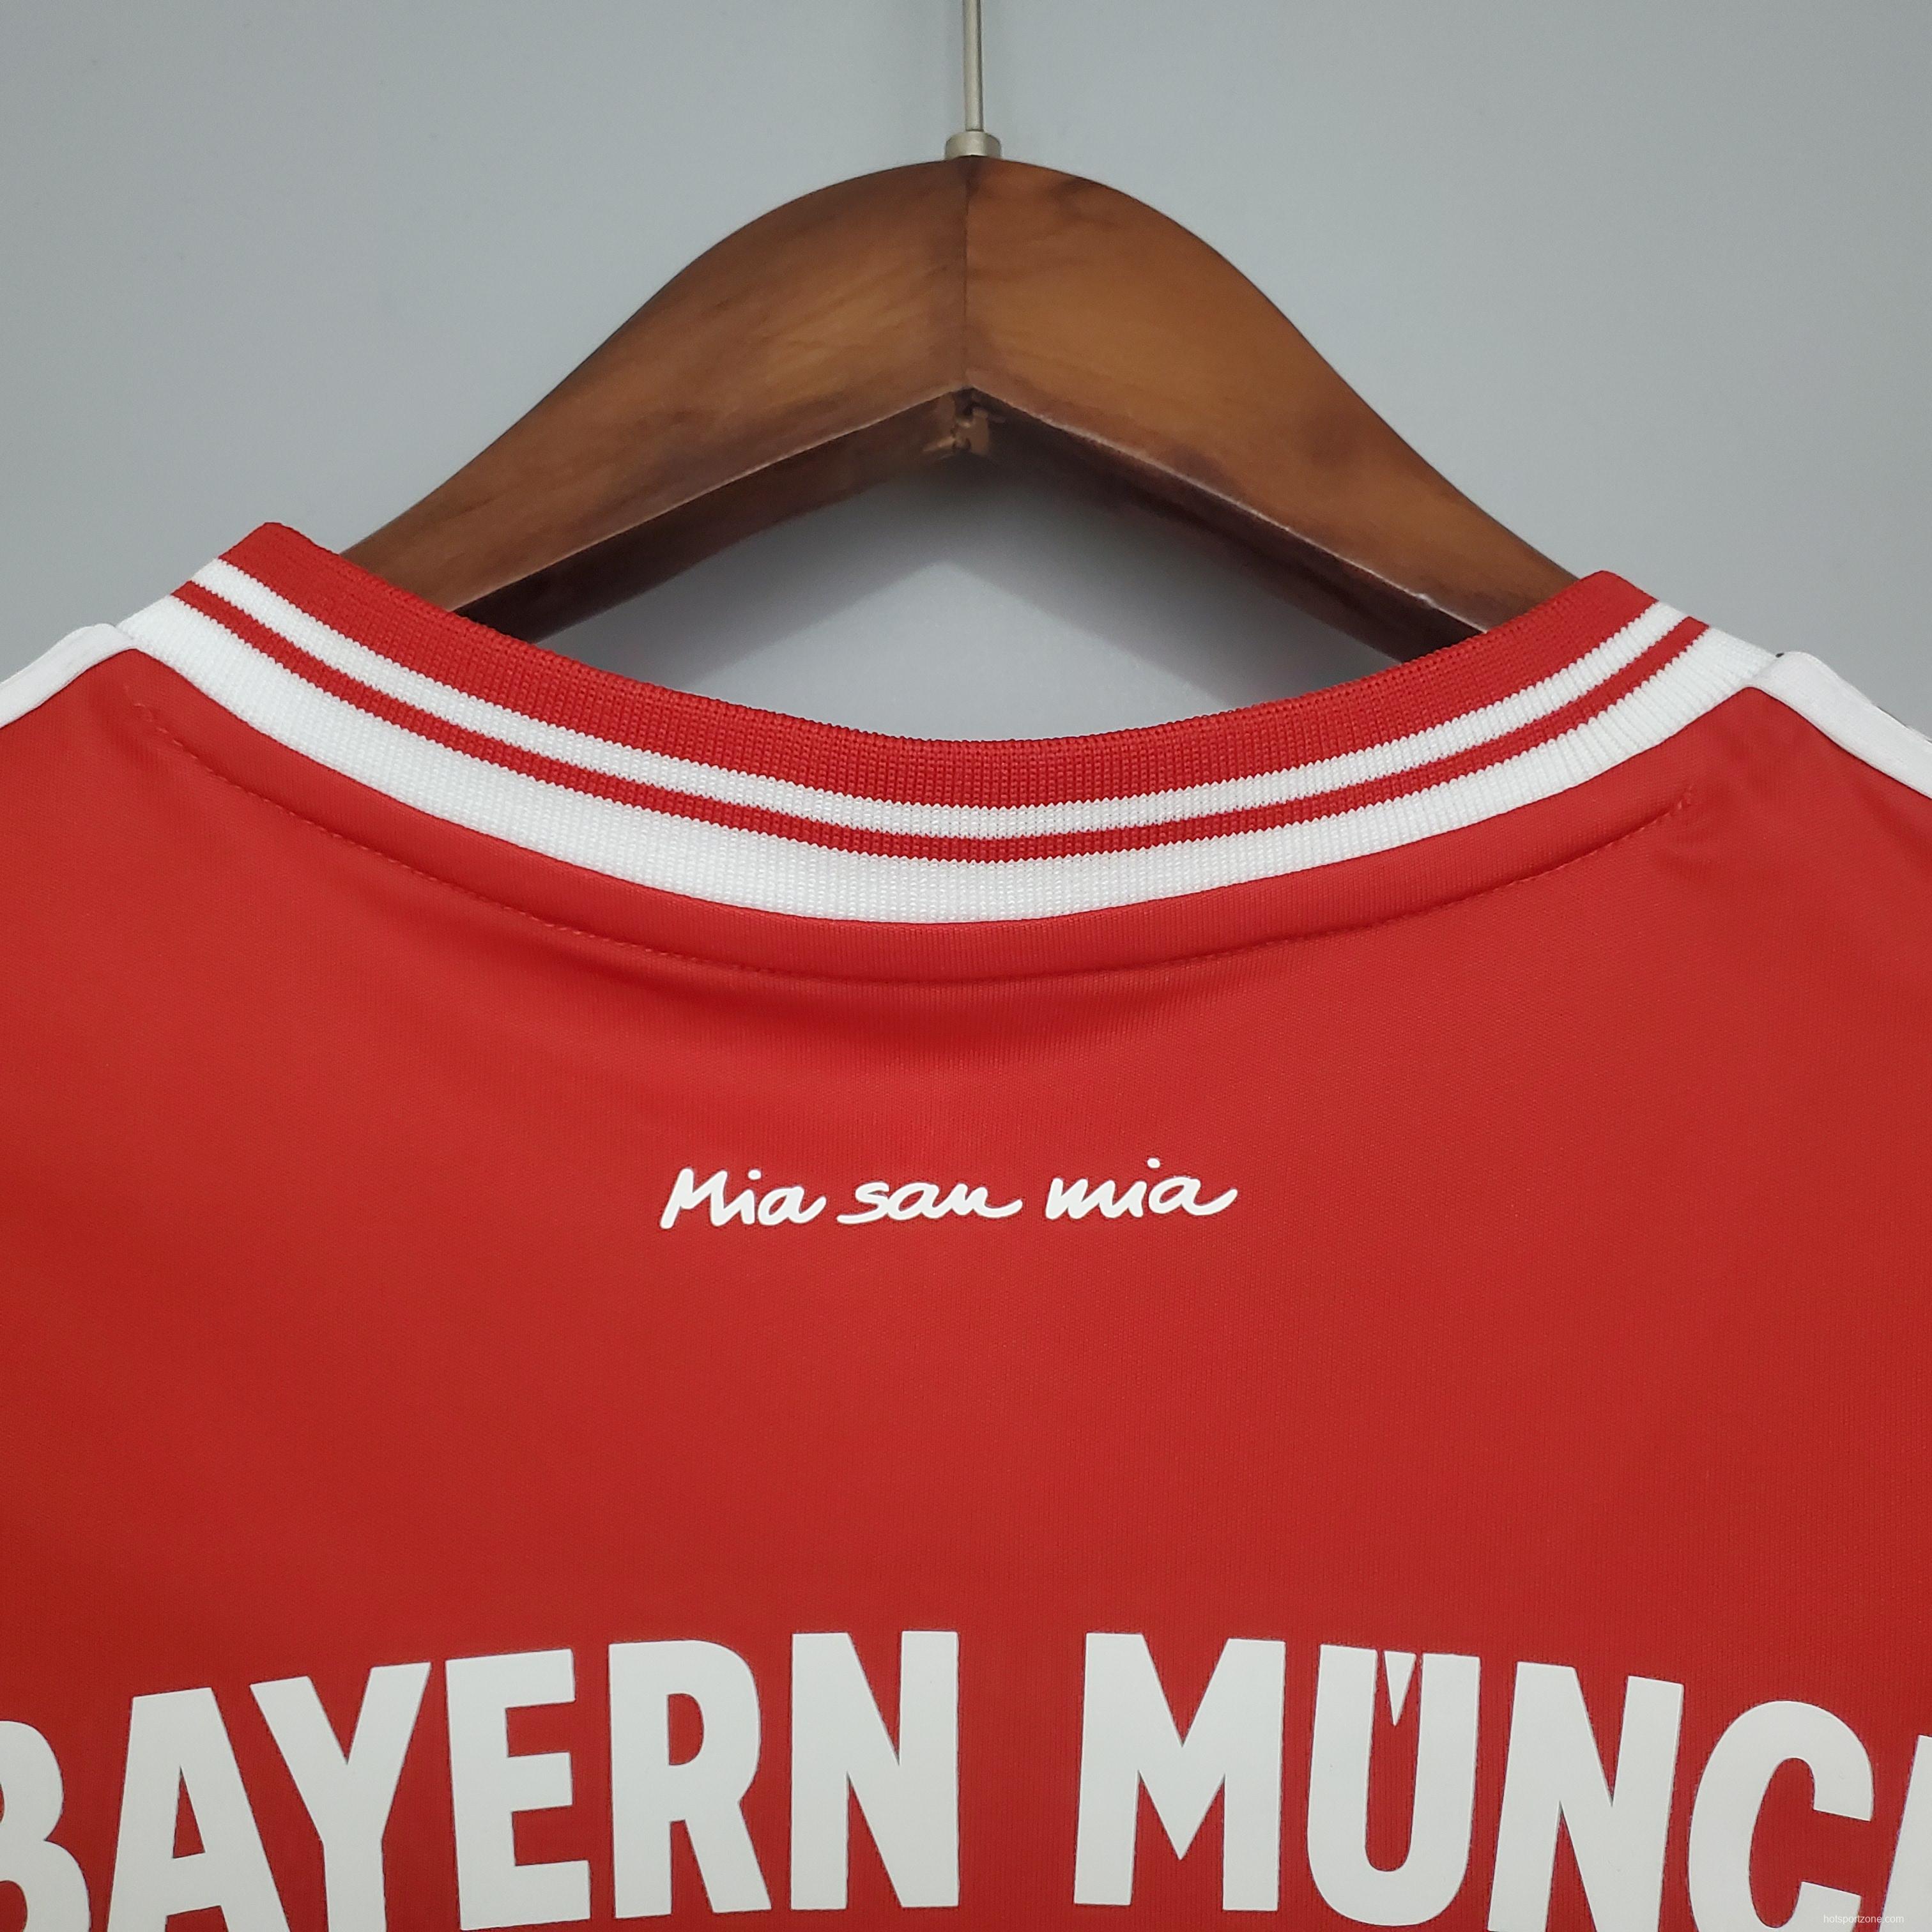 Retro Bayern Munich 12/13 Champions League home Soccer Jersey